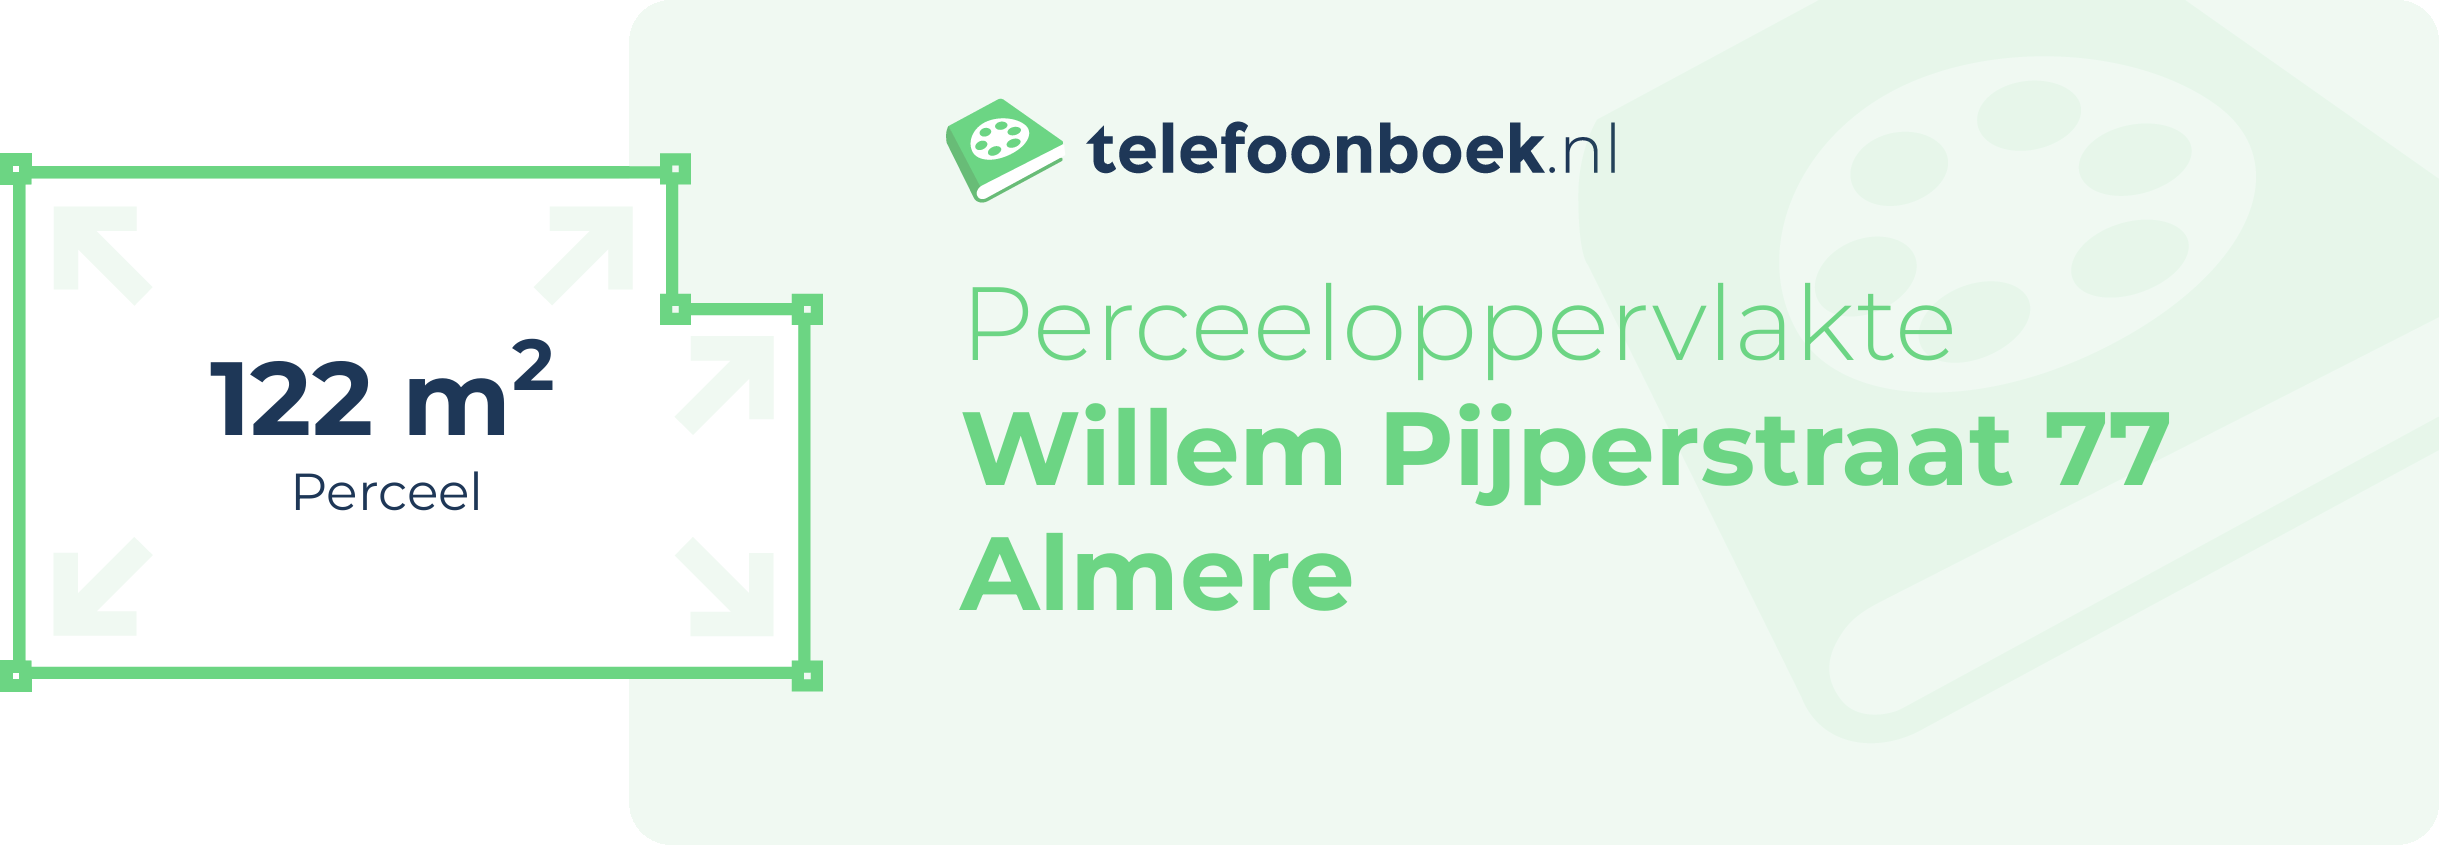 Perceeloppervlakte Willem Pijperstraat 77 Almere